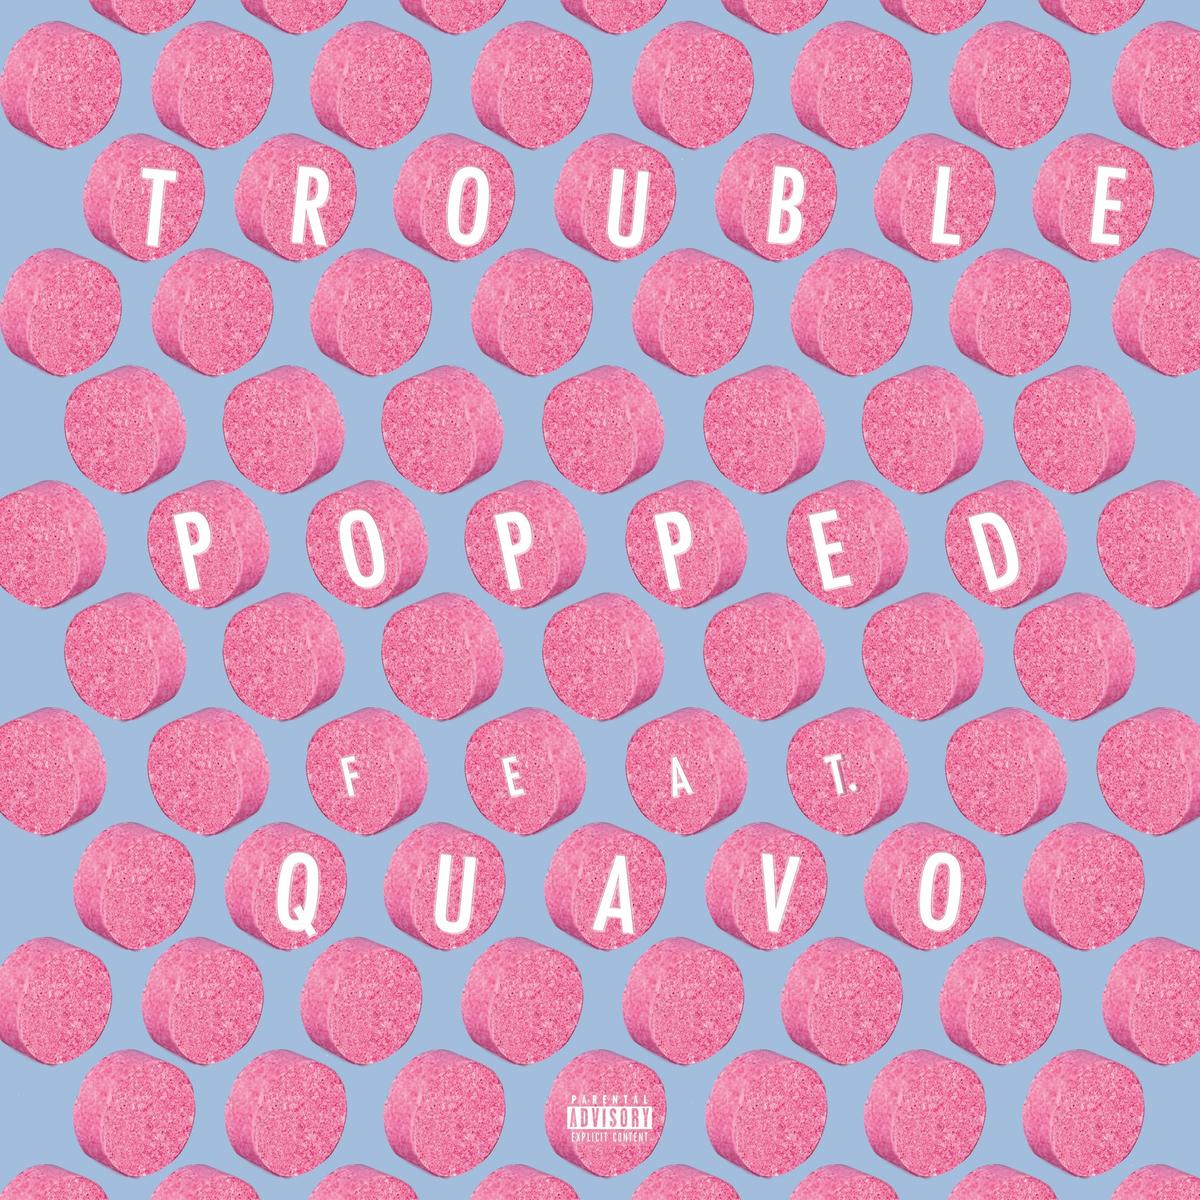 Trouble & Quavo Unite For “Popped”